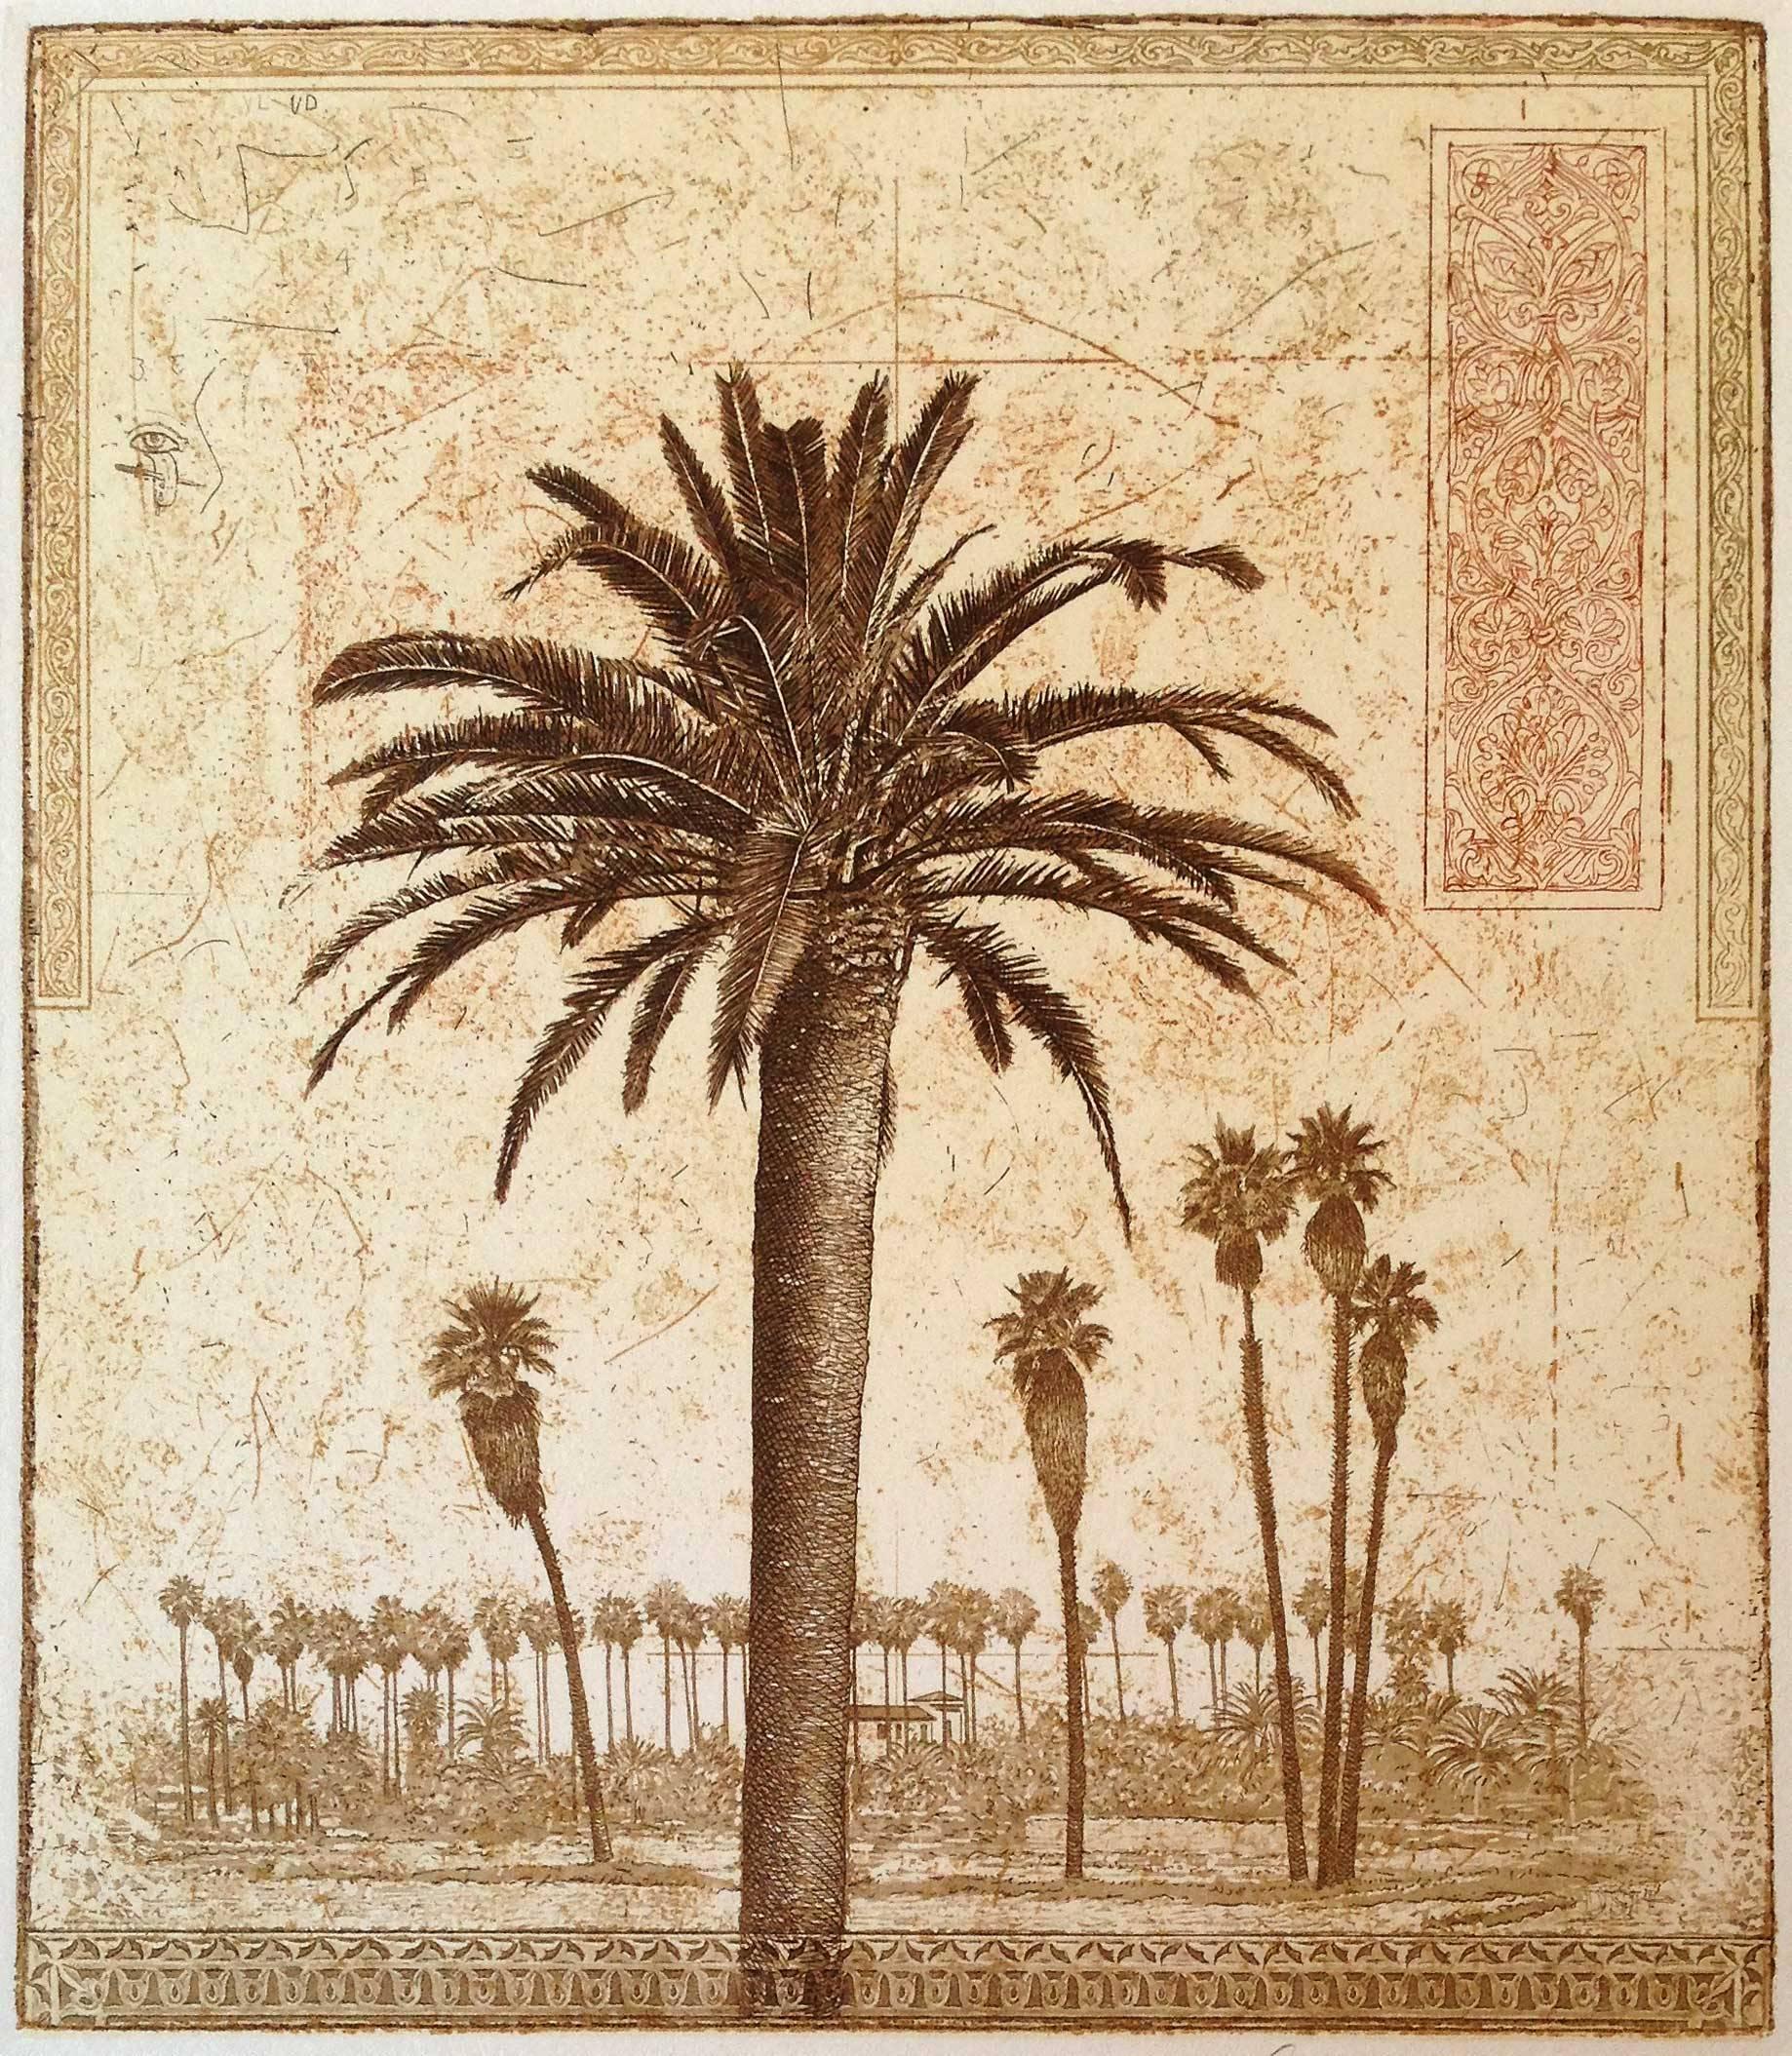 David Smith-Harrison Landscape Print - 69 Palms